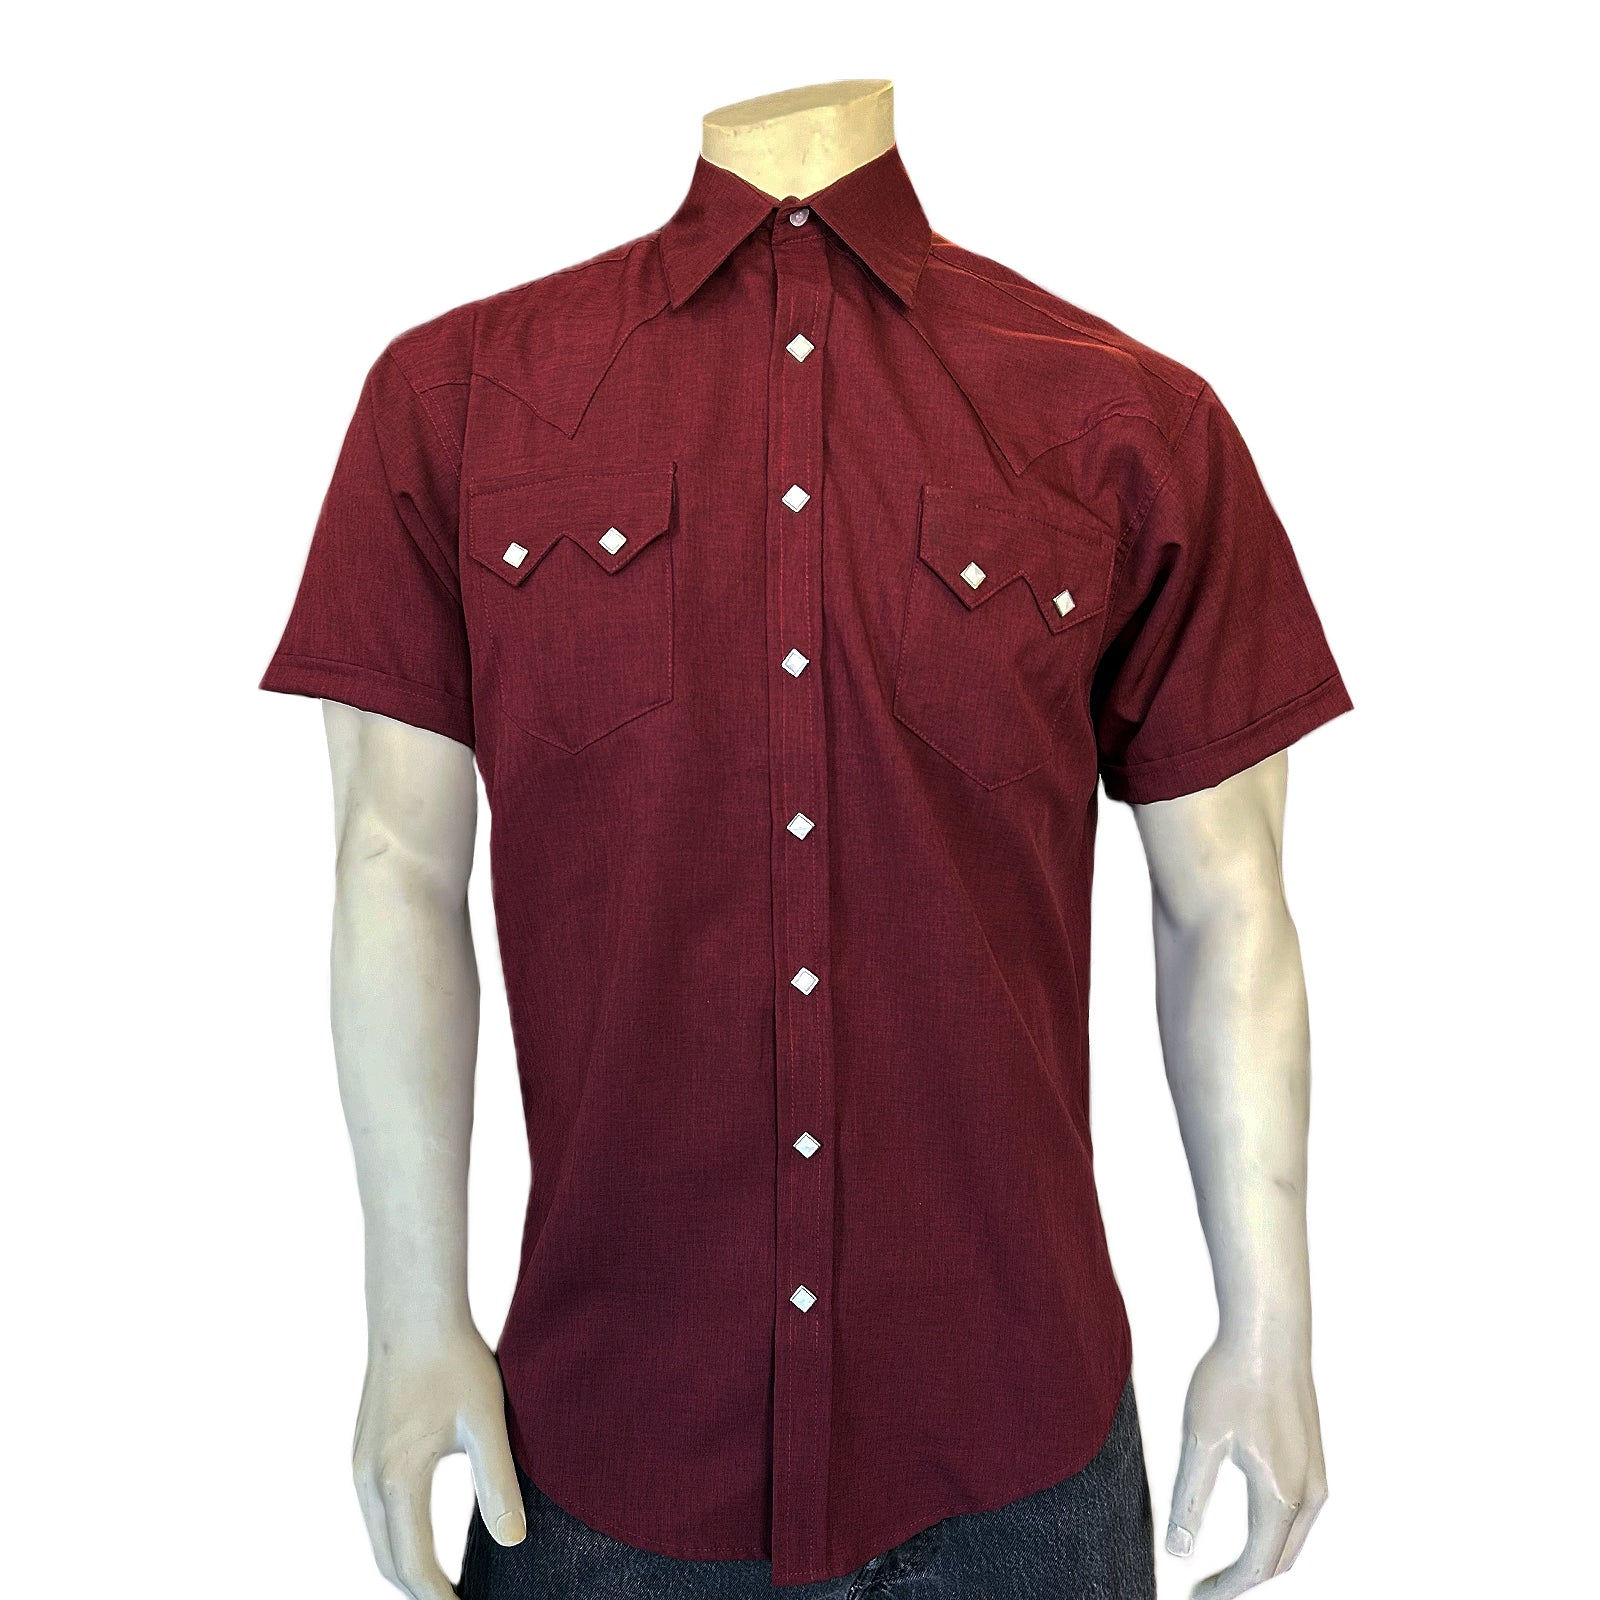 Men's Short Sleeve Burgundy Western Shirt with UV Protection